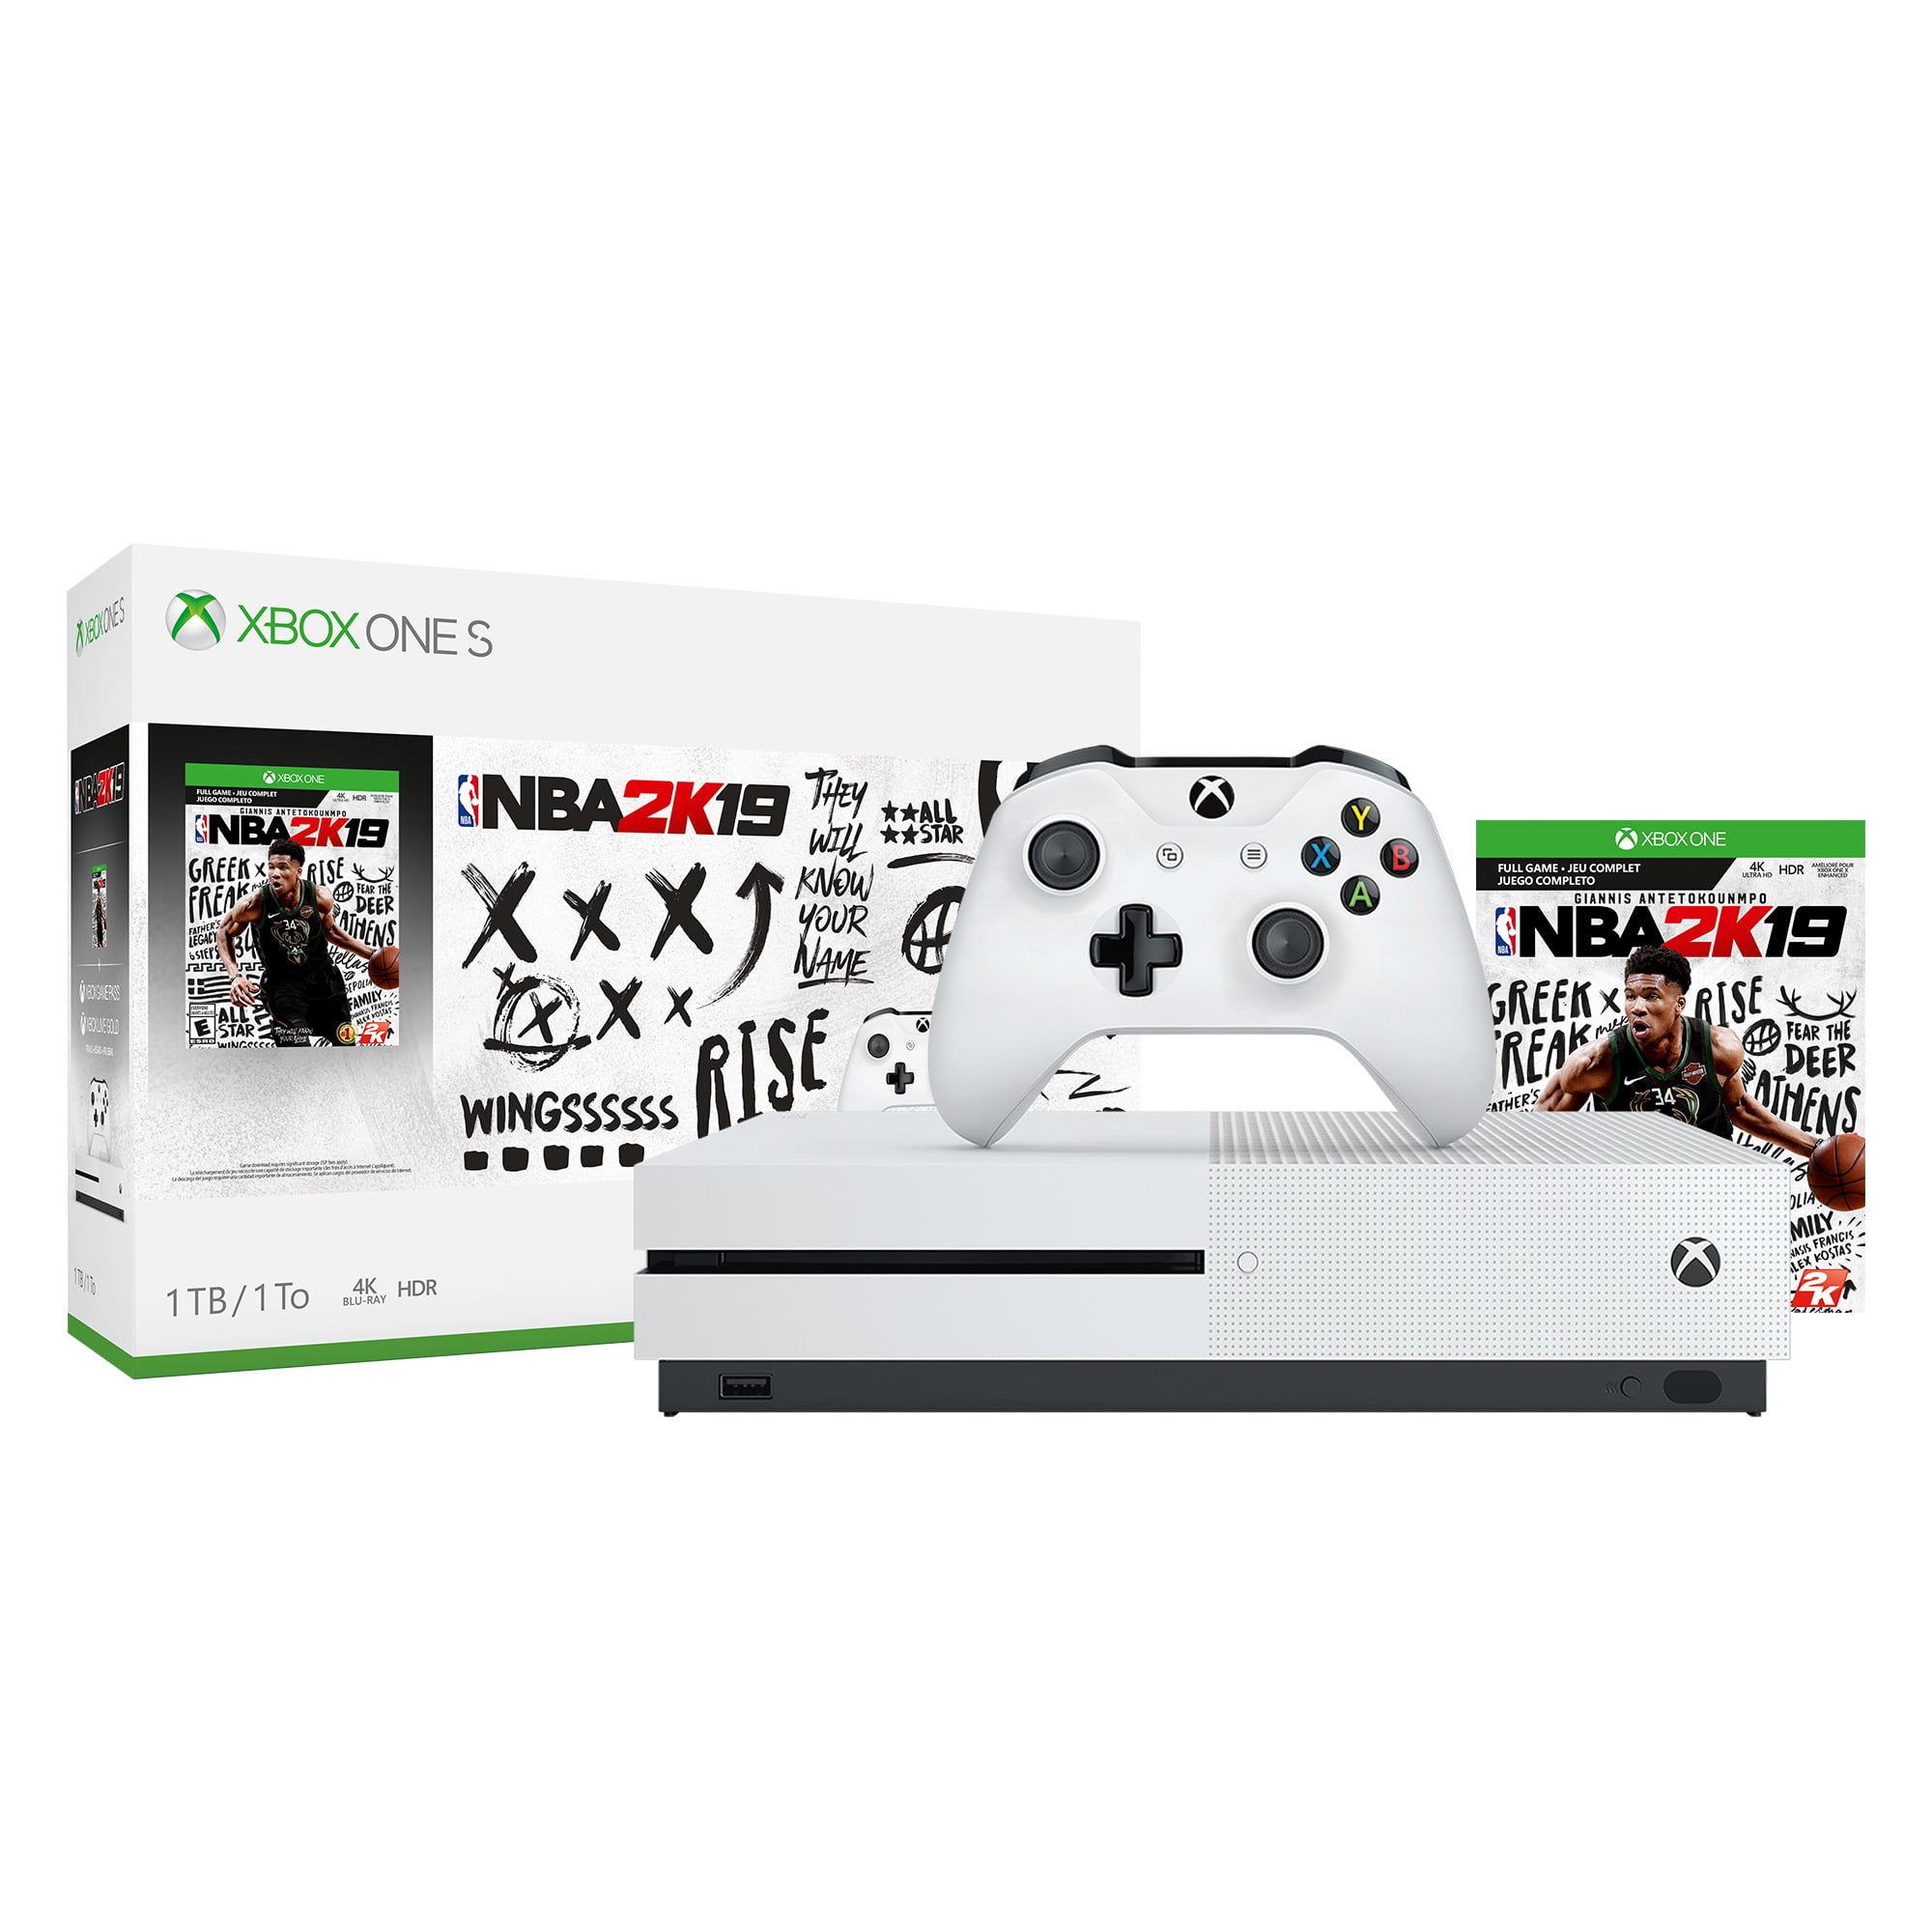 NBA 2K21 Xbox One, 002400300599